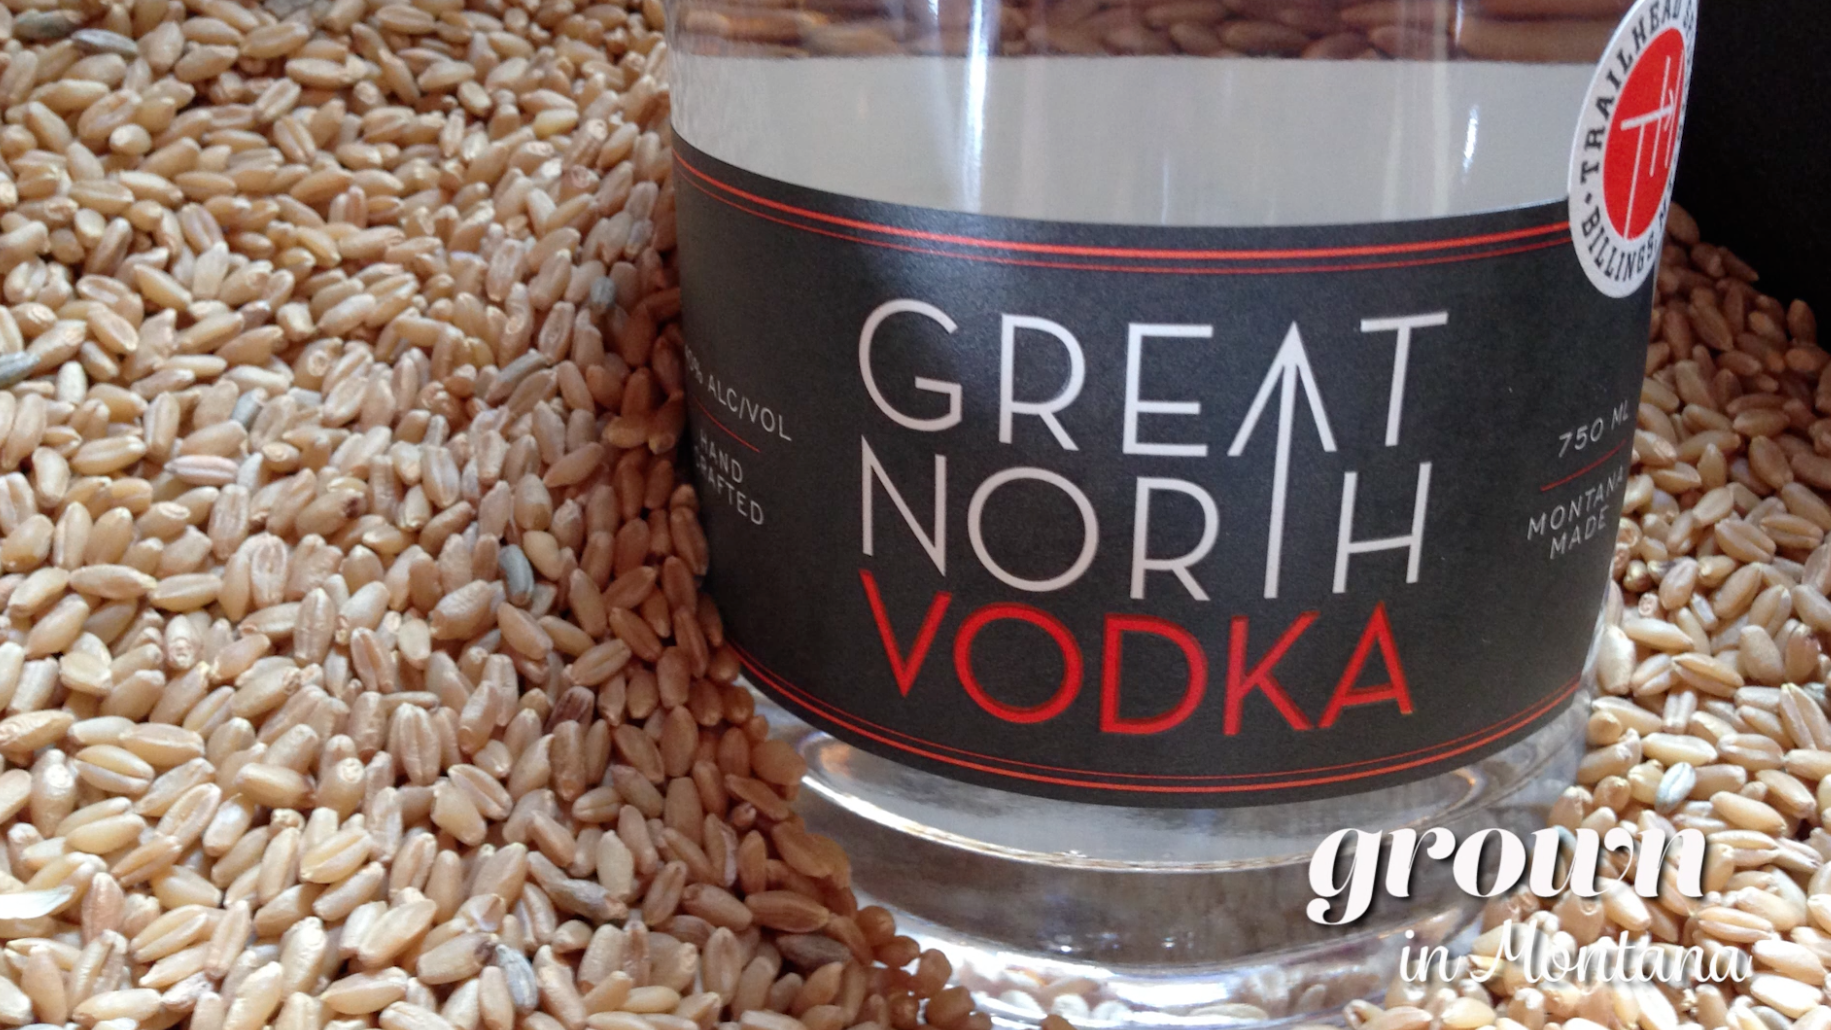 Great North Vodka. Award winning, grown in Montana, distilled in Montana.